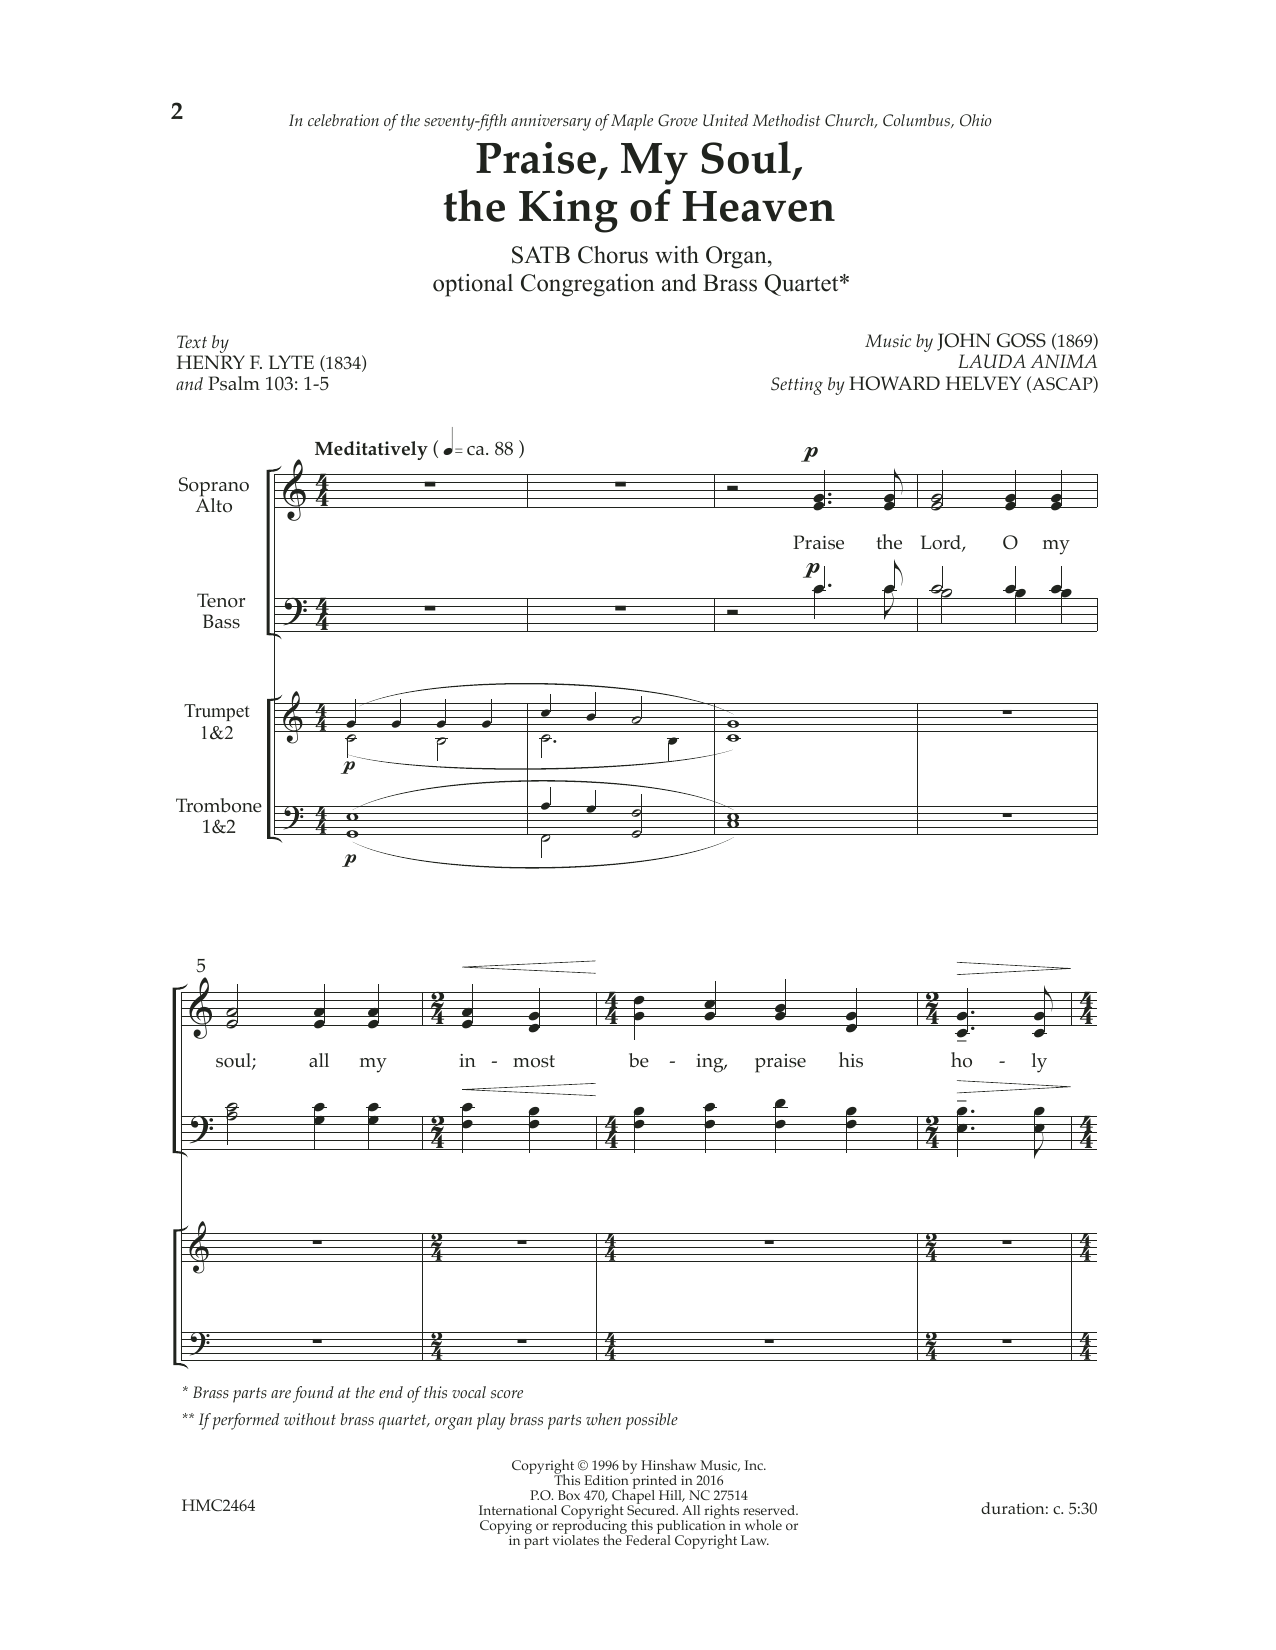 Jon Goss Praise, My Soul, The King of Heaven (arr. Howard Helvey) Sheet Music Notes & Chords for SATB Choir - Download or Print PDF